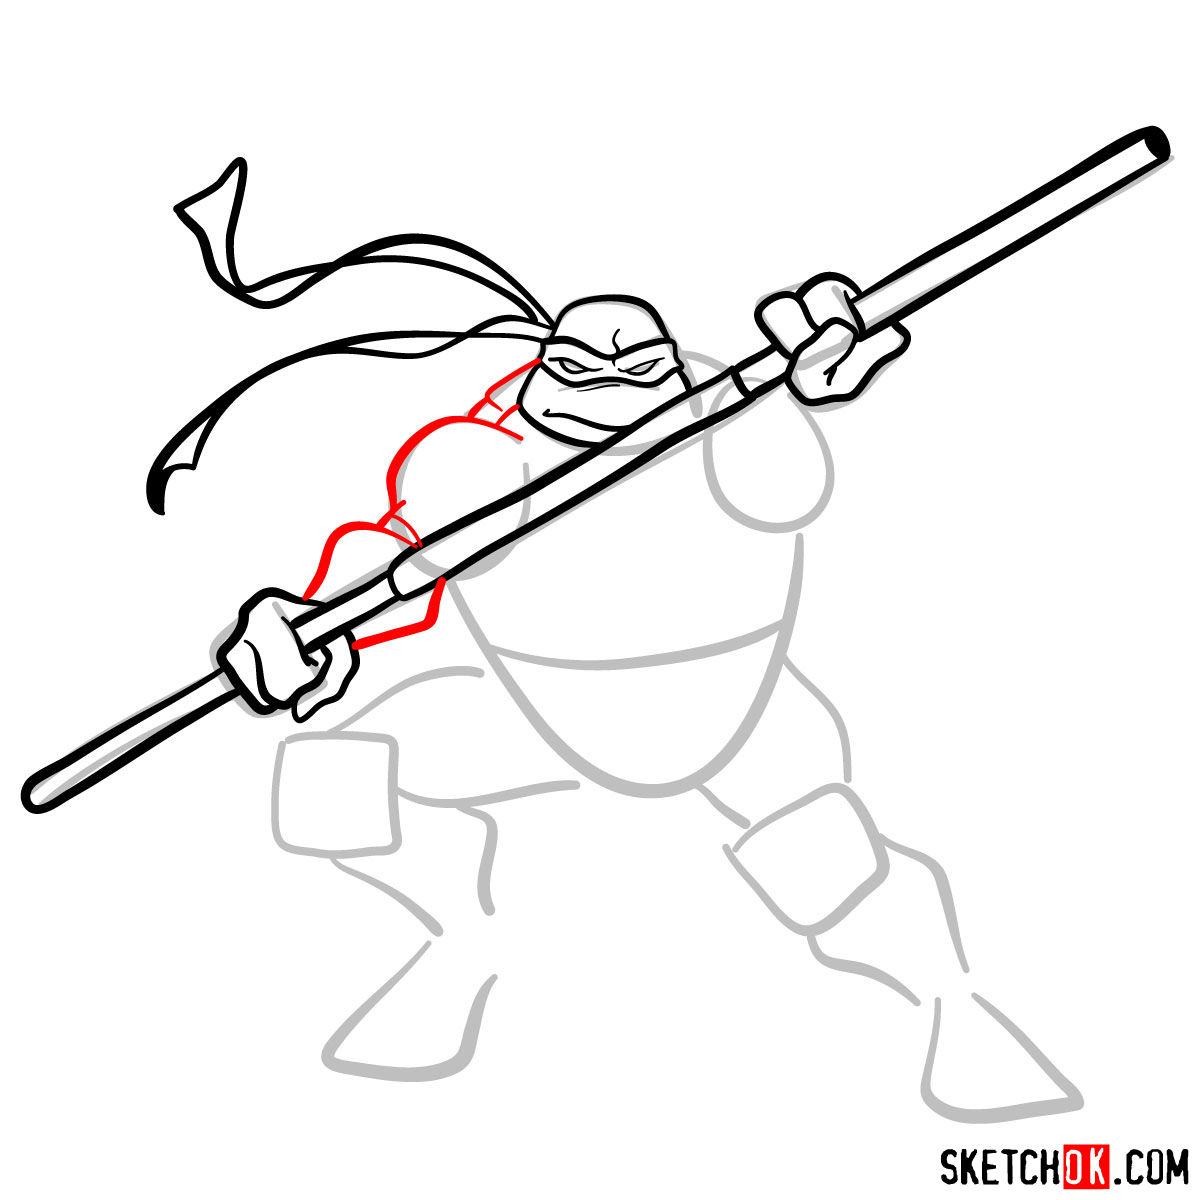 How to draw Donatello ninja turtle - step 07